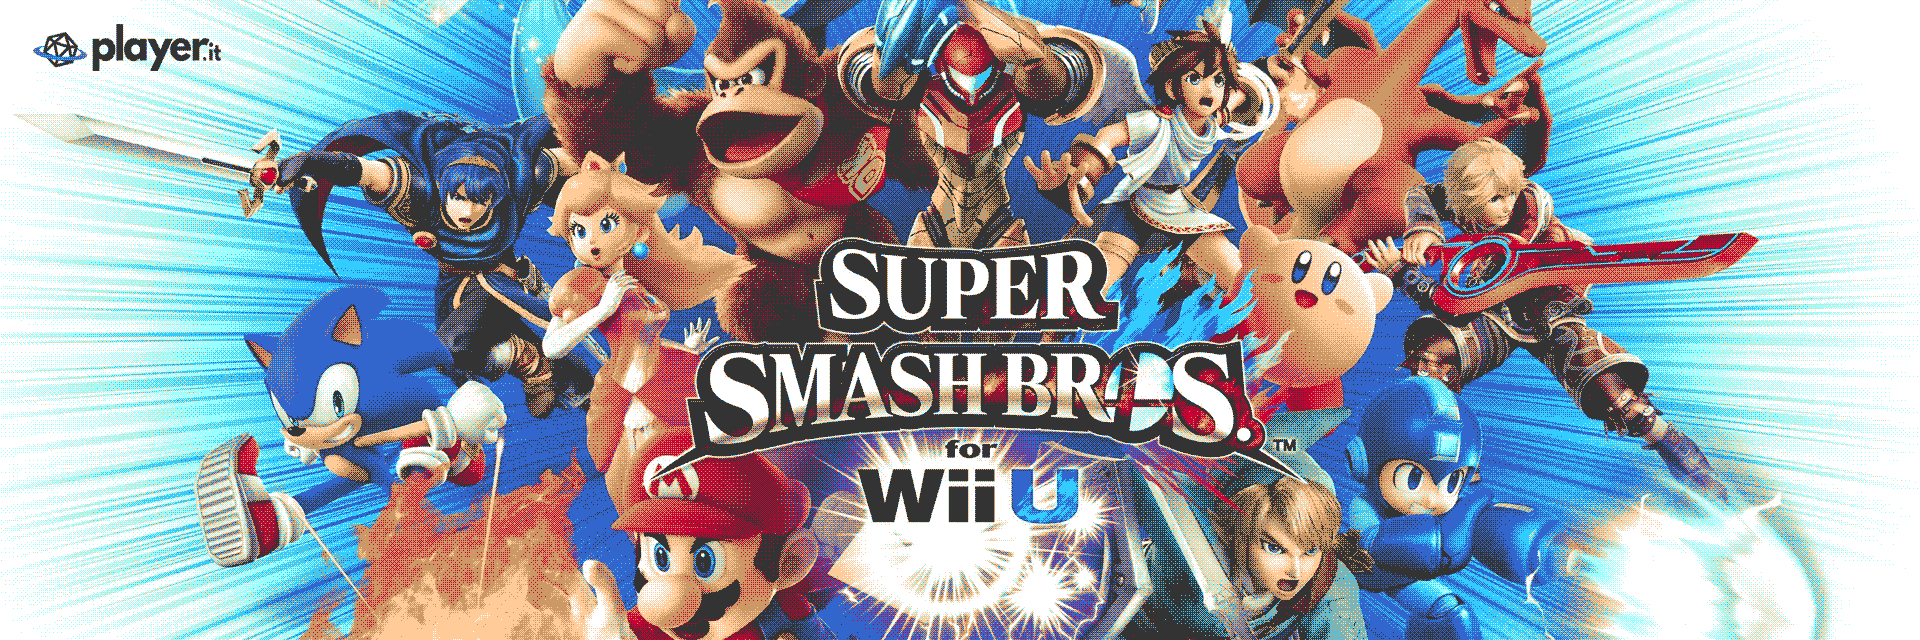 Super Smash Bros. (wii U, 3DS) artwork wallpaper scheda gioco